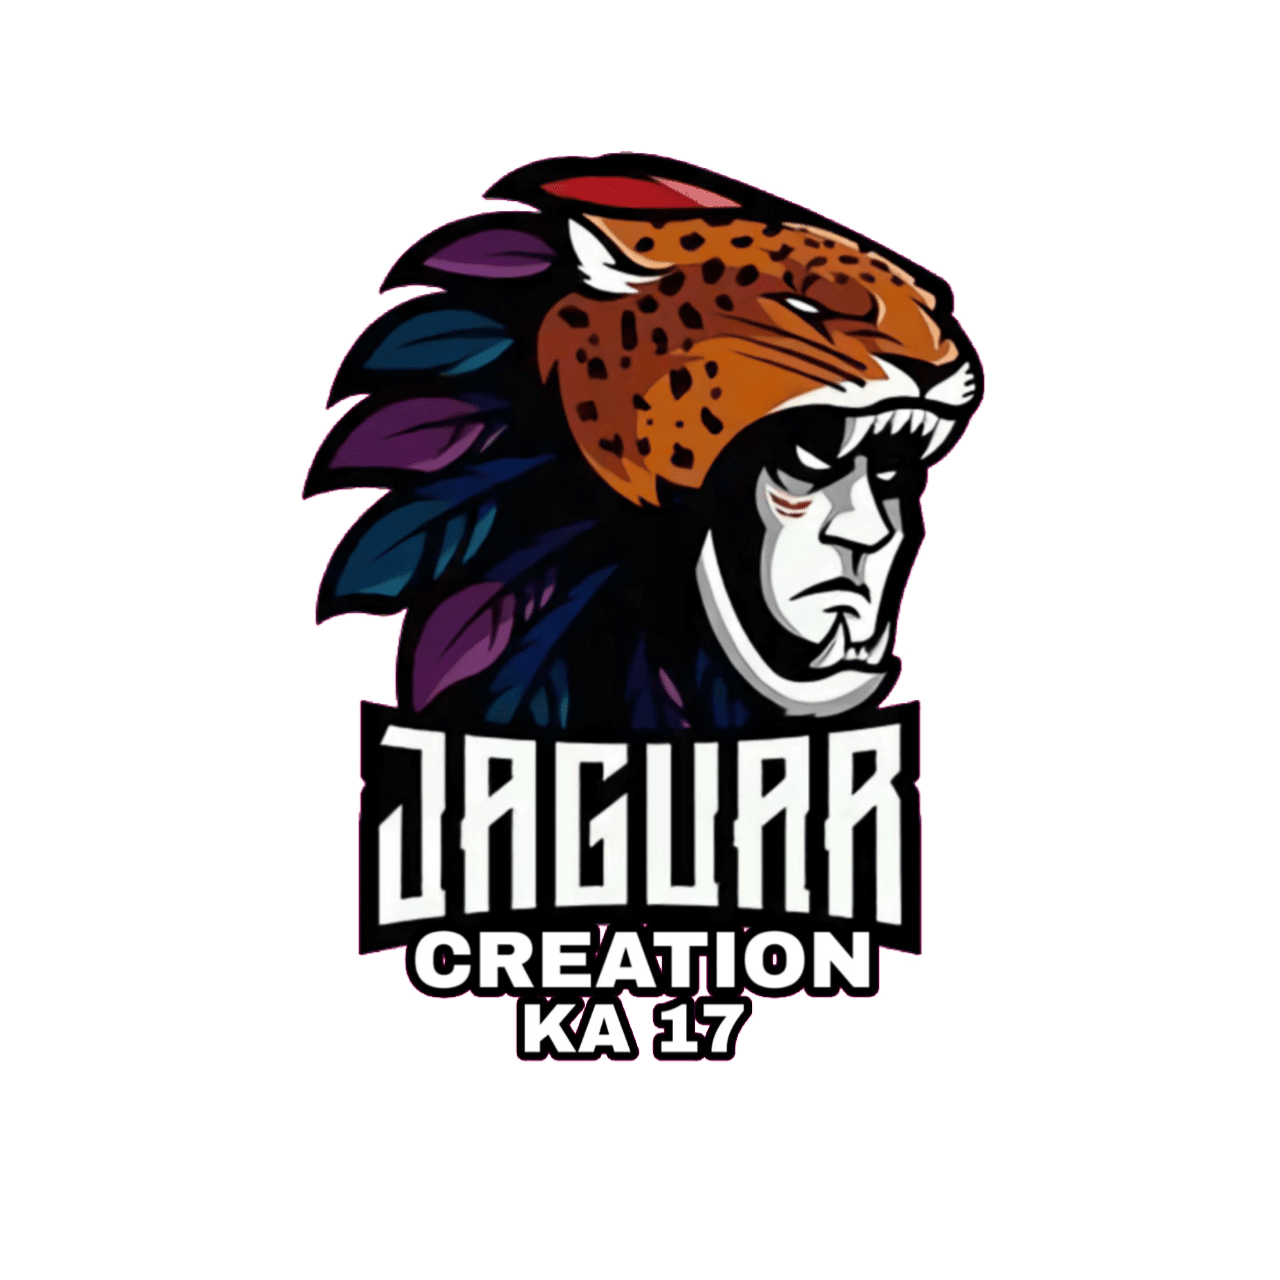 Jaguar Creation KA 17